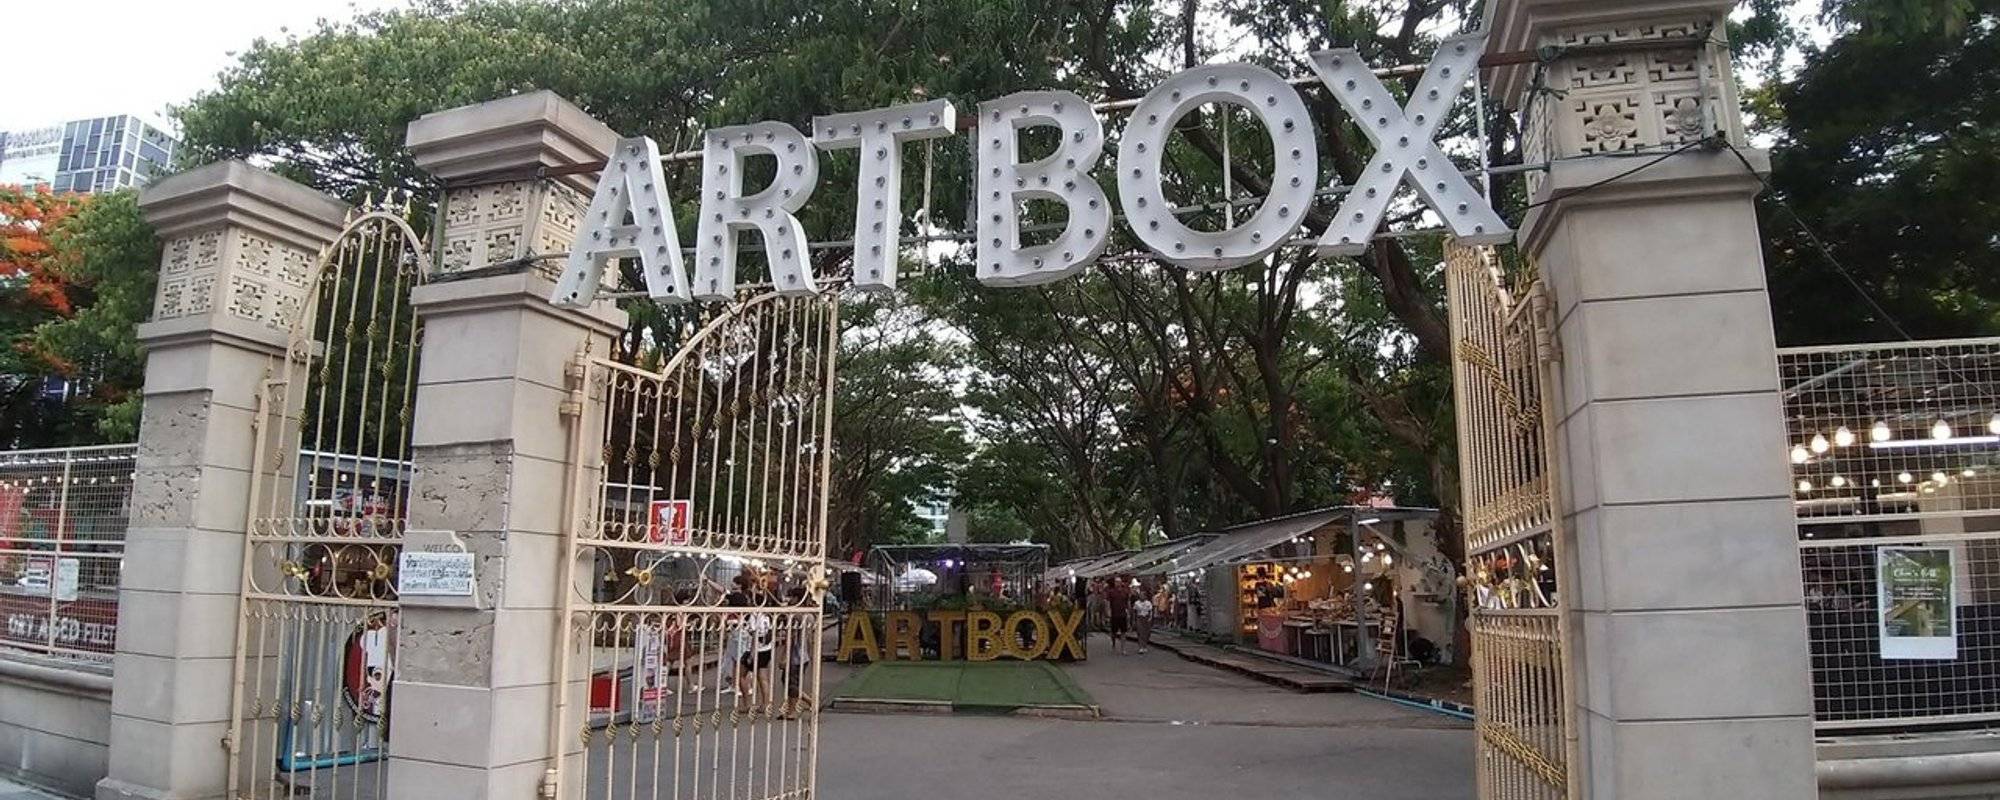 MarketFriday - Artbox Bangkok !!